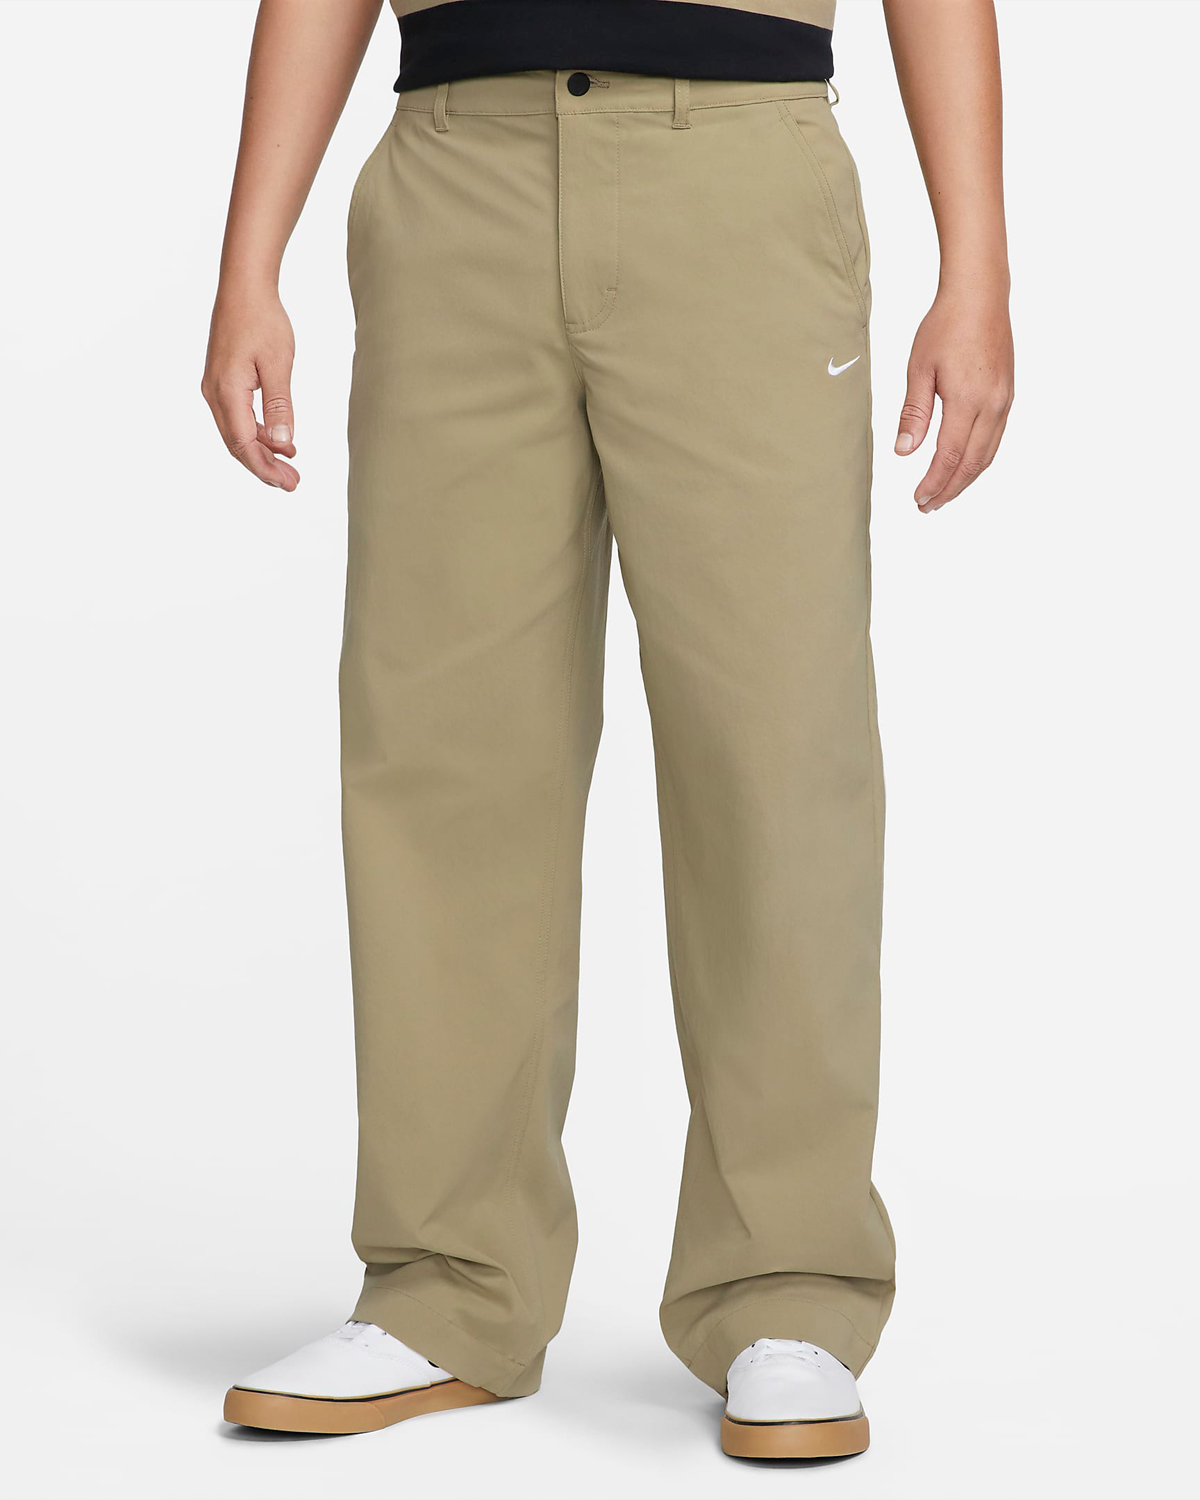 Nike-SB-Chino-Pants-Neutral-Olive